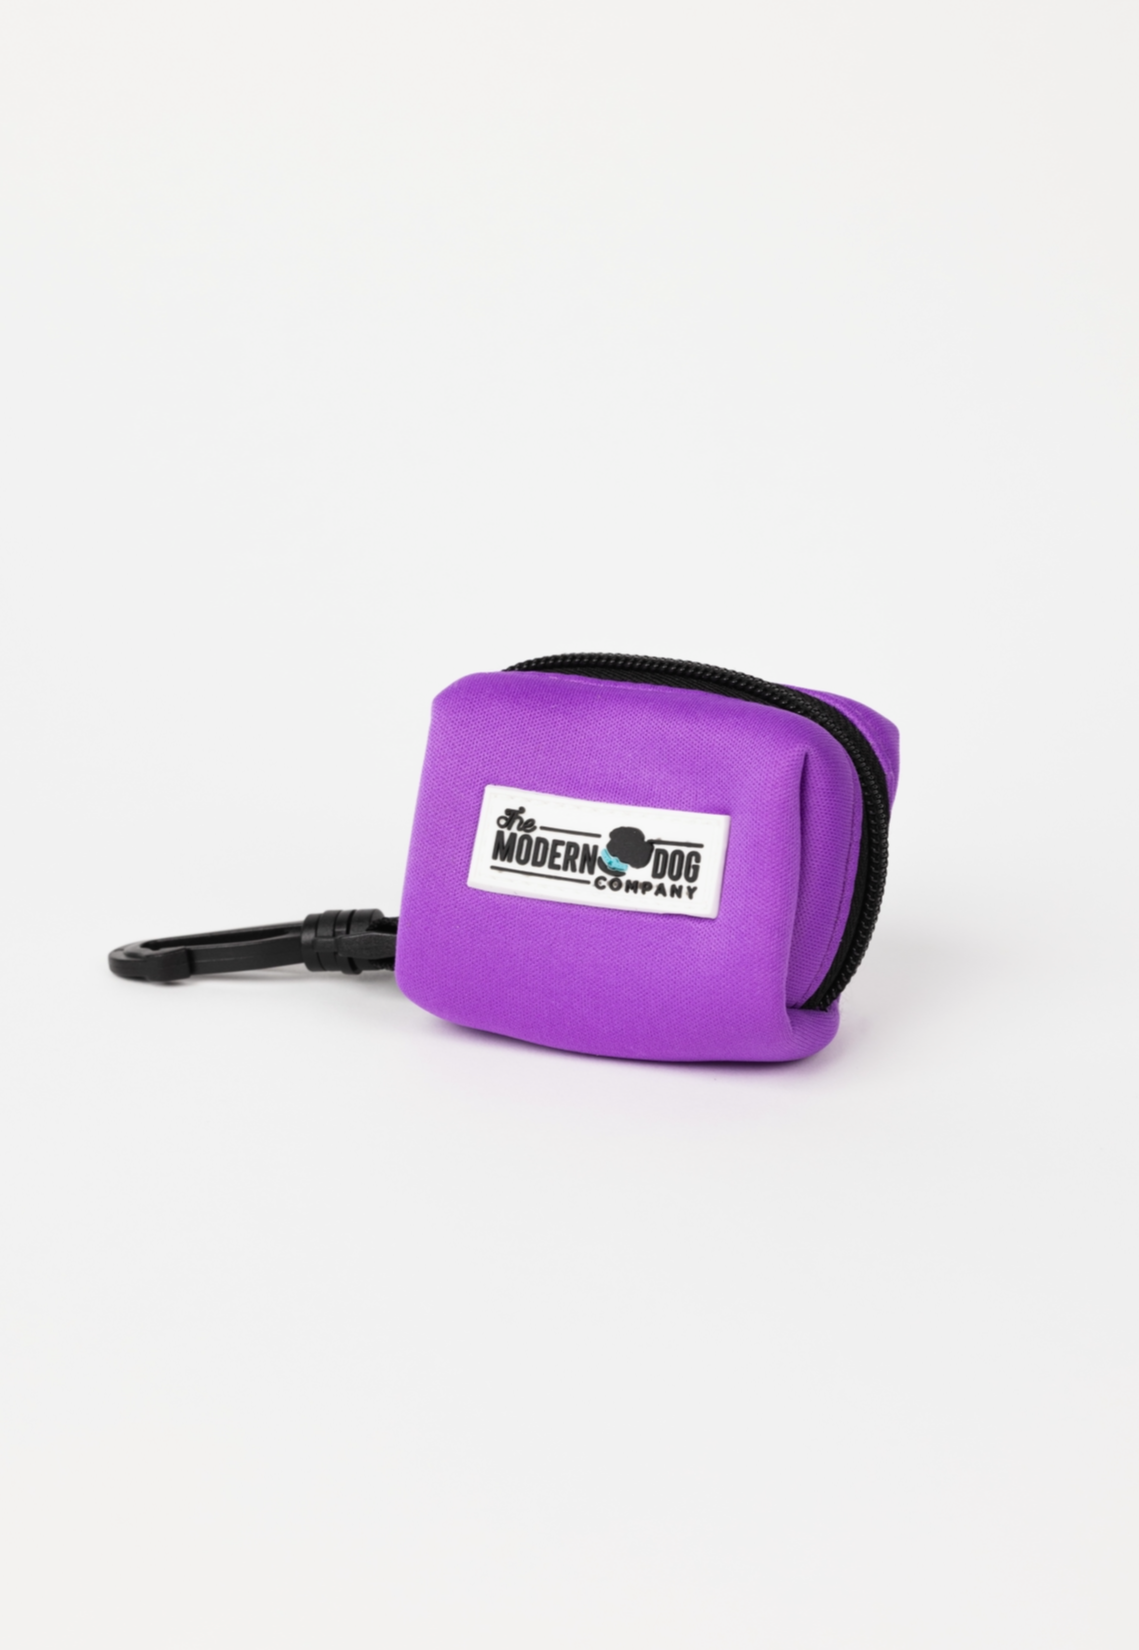 The Modern Dog Company - Electric Fuchsia Poop Bag Holder